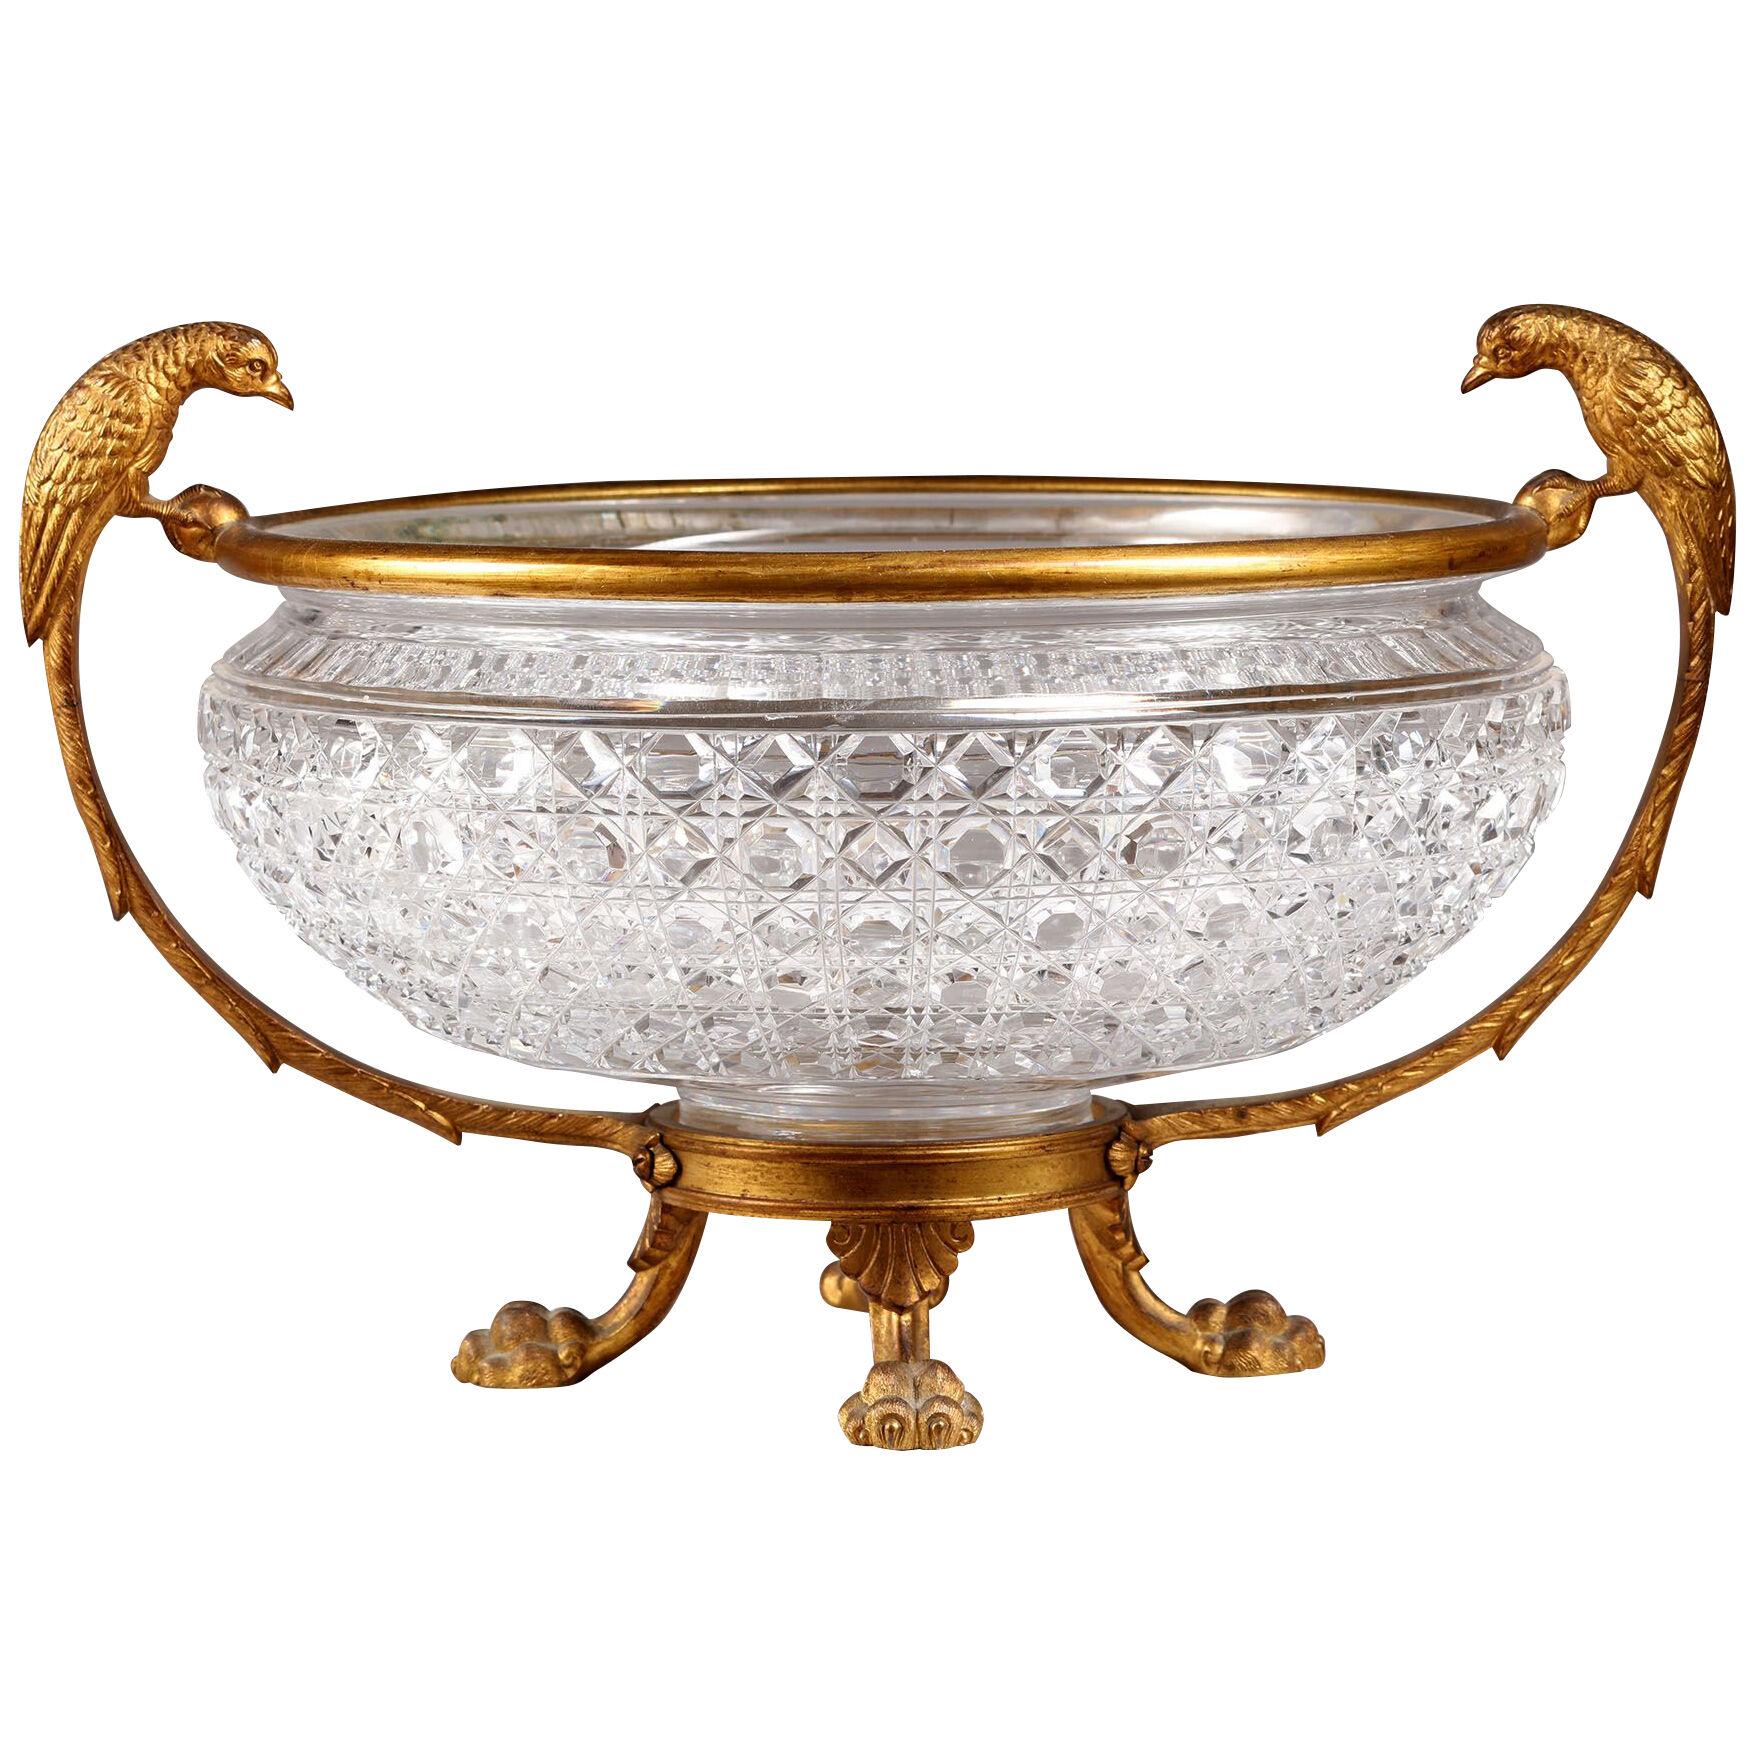 A Victorian cut glass and gilt bronze bowl